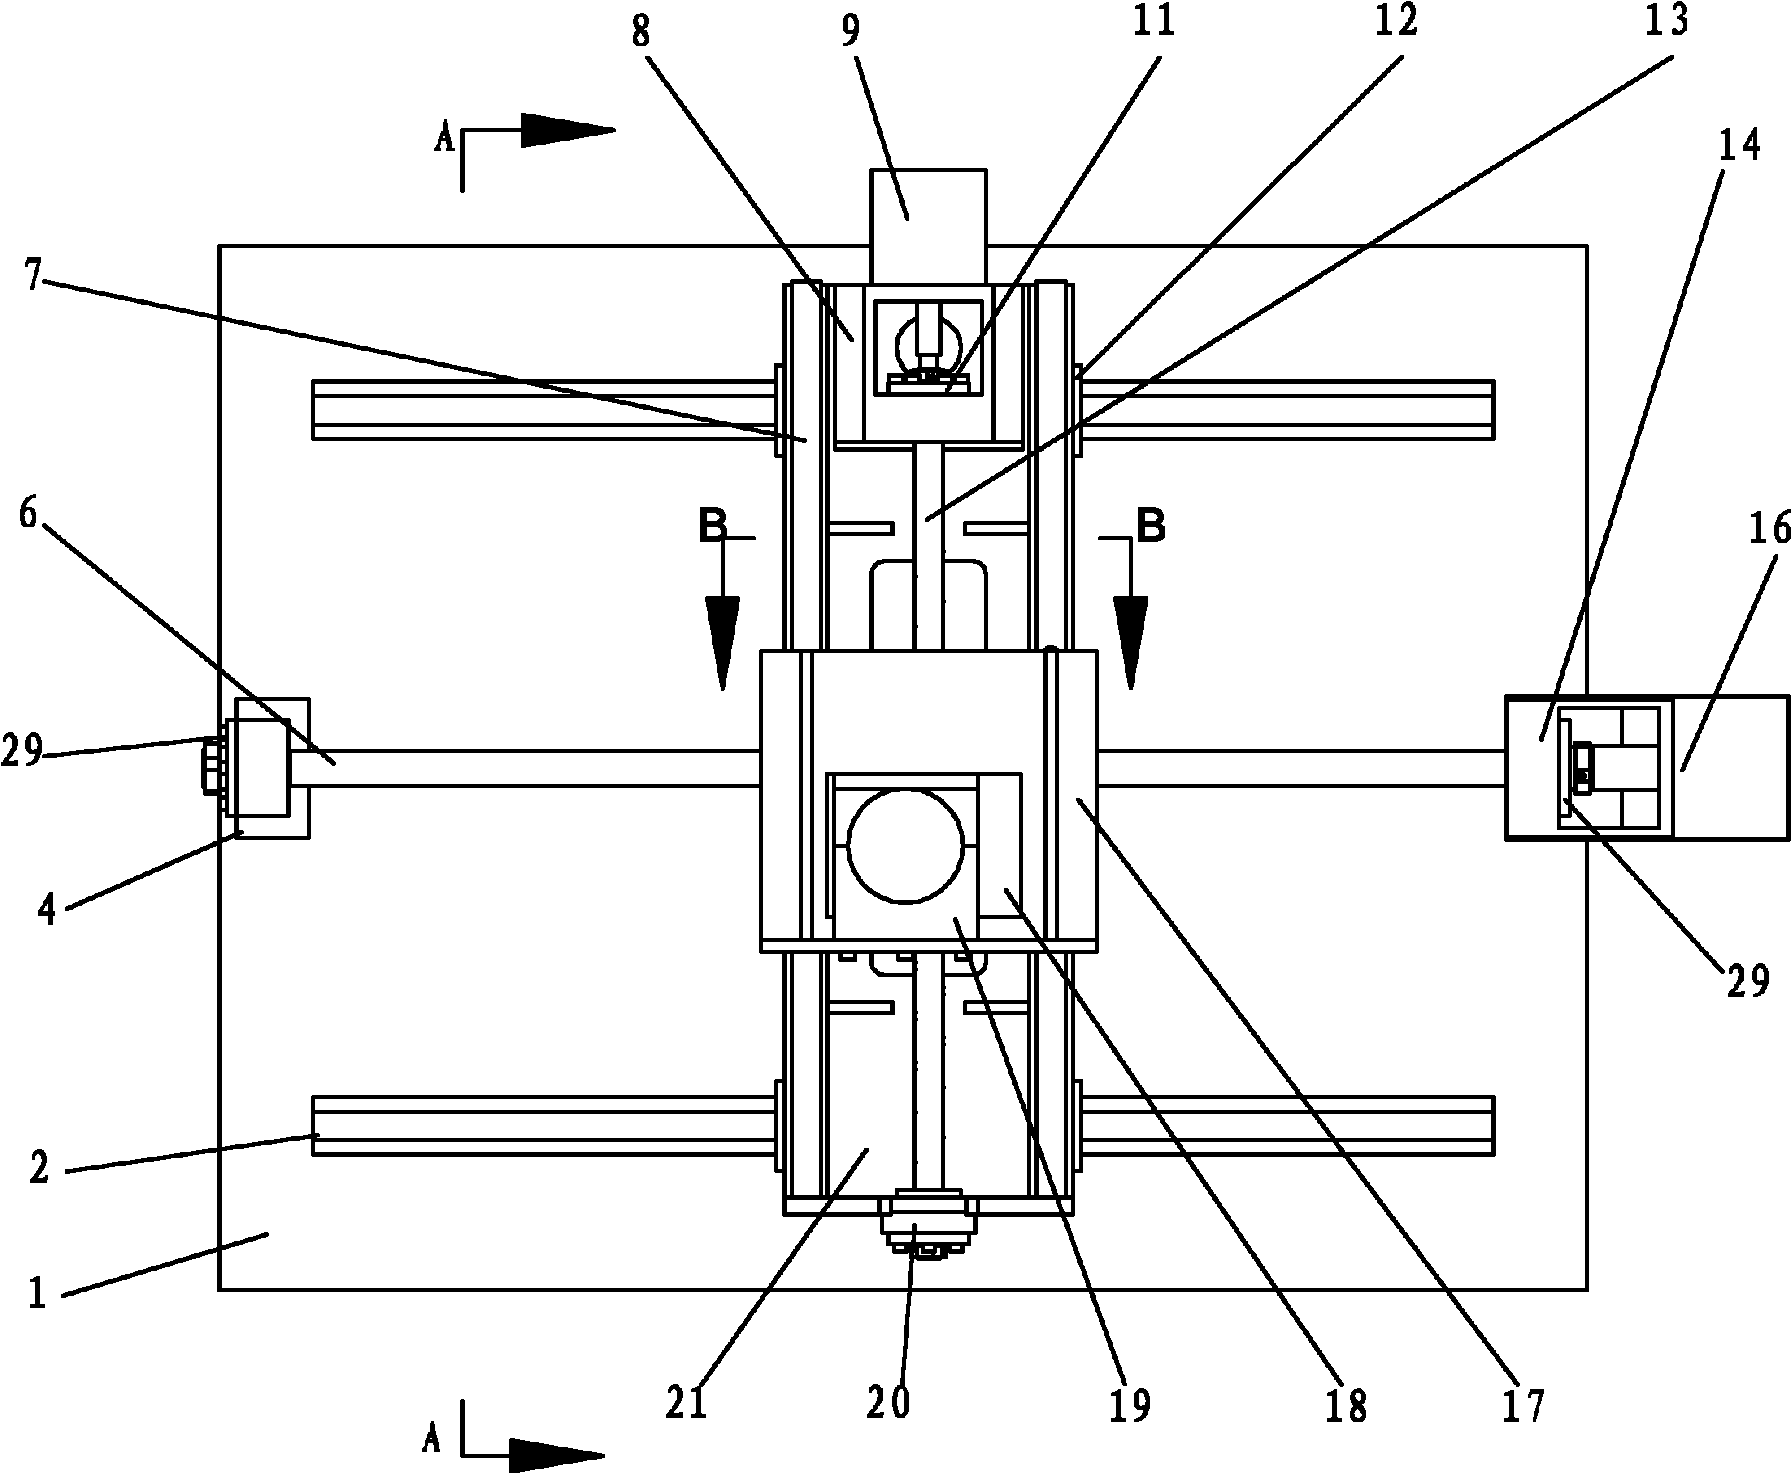 Imaging device of large geotechnical centrifuge